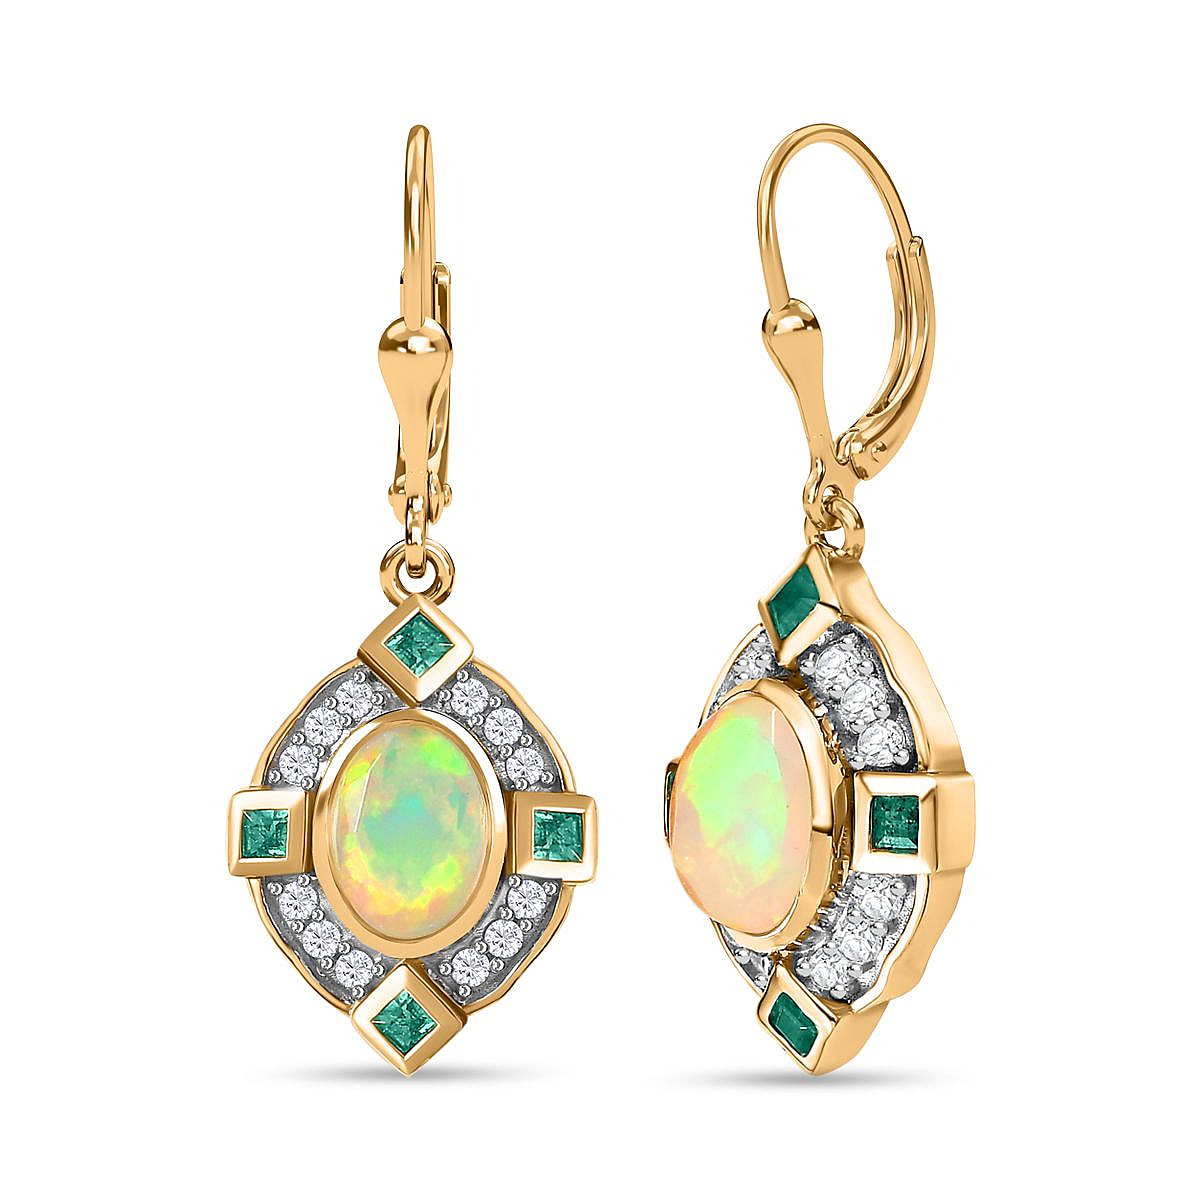 Ethiopian Welo Opal,Emerald & Natural Zircon Earrings in 18K Vermeil YG Plated Sterling Silver 2.46 Ct, Silver Wt. 7.13 Gms